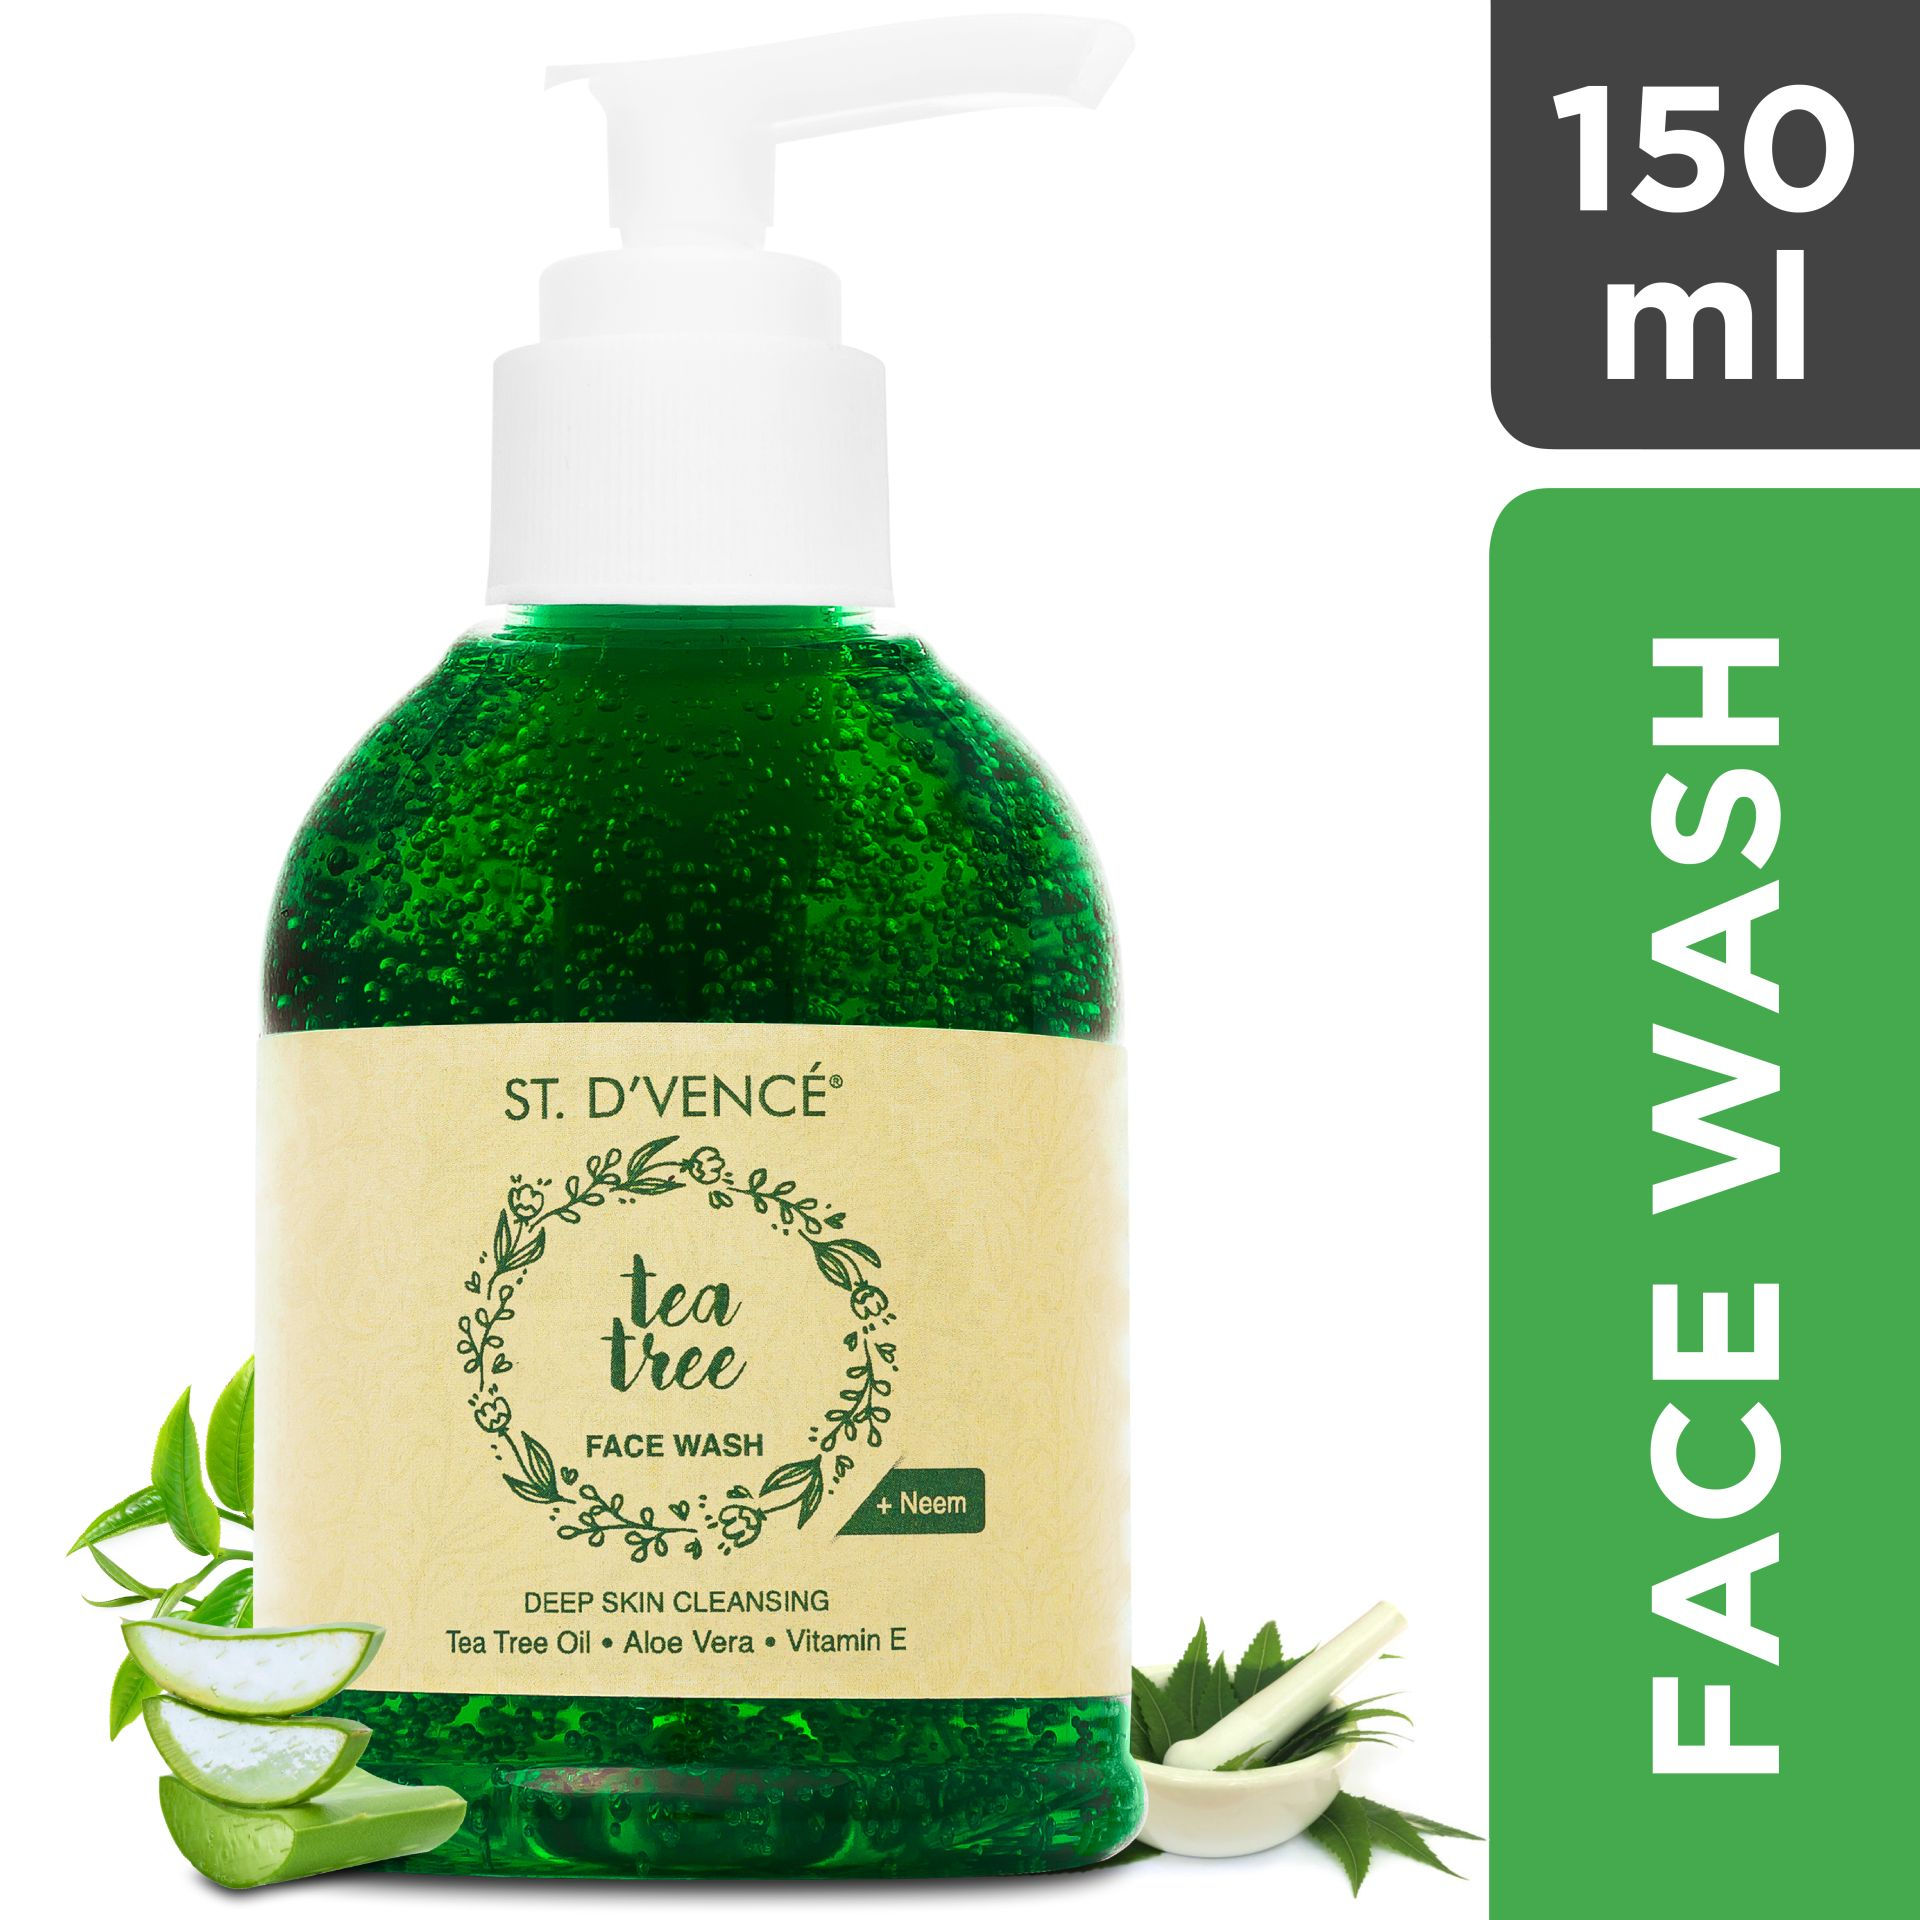 St. D'vencé Essential Tea Tree Oil Deep Skin Cleansing Face Wash